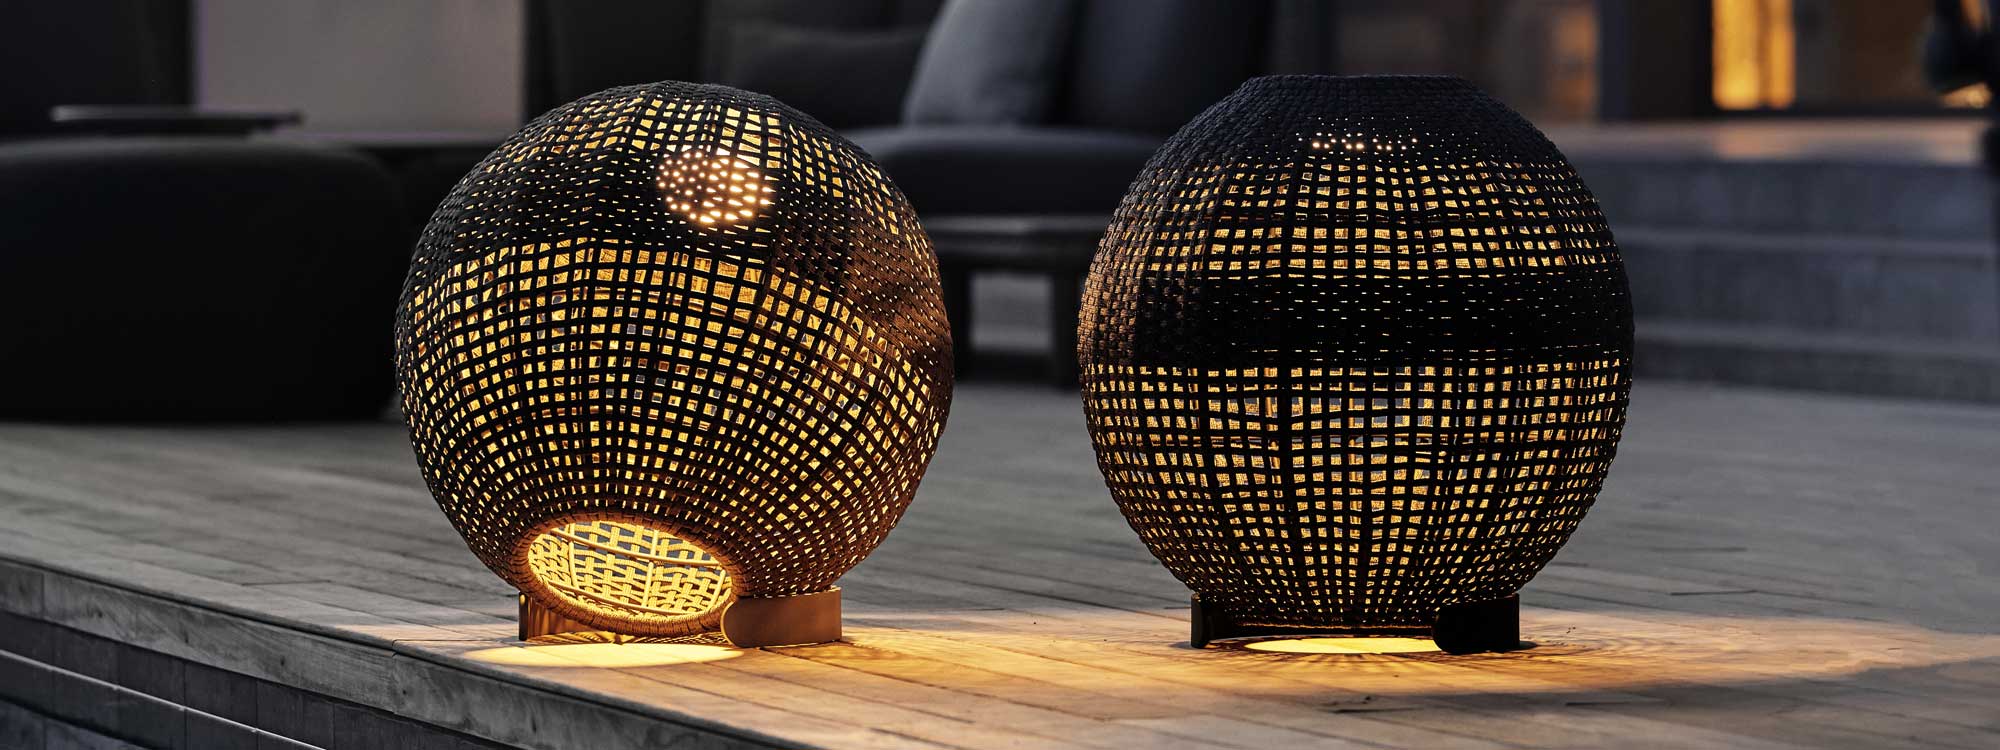 Image of pair of illuminated Illusion spherical solar lanterns by Cane-line